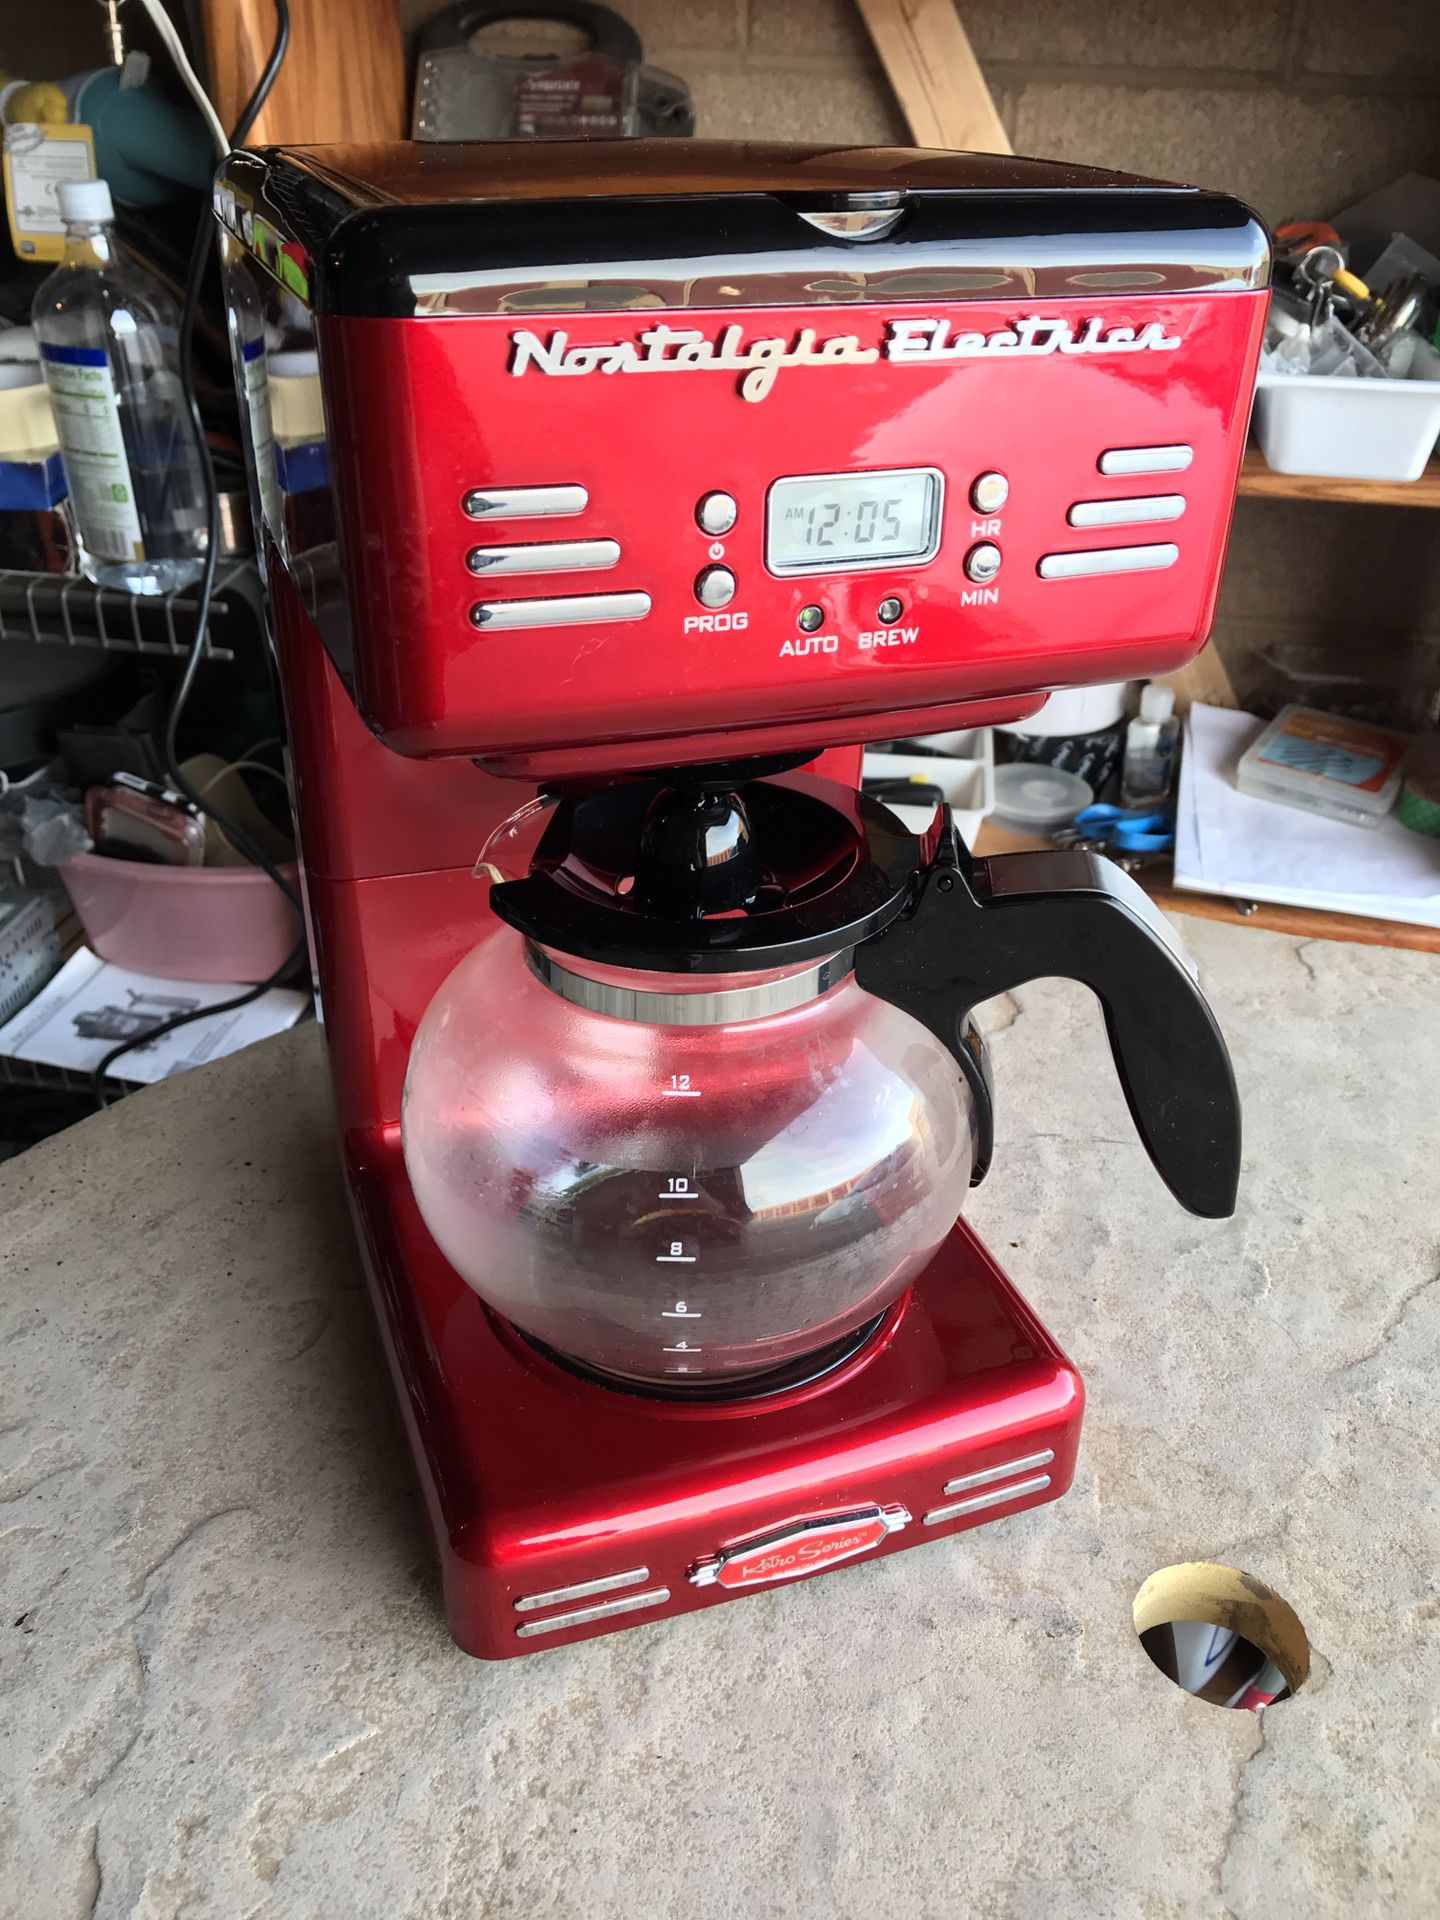 Nostalgia Electrics Nostalgia 12-Cup Coffee Maker